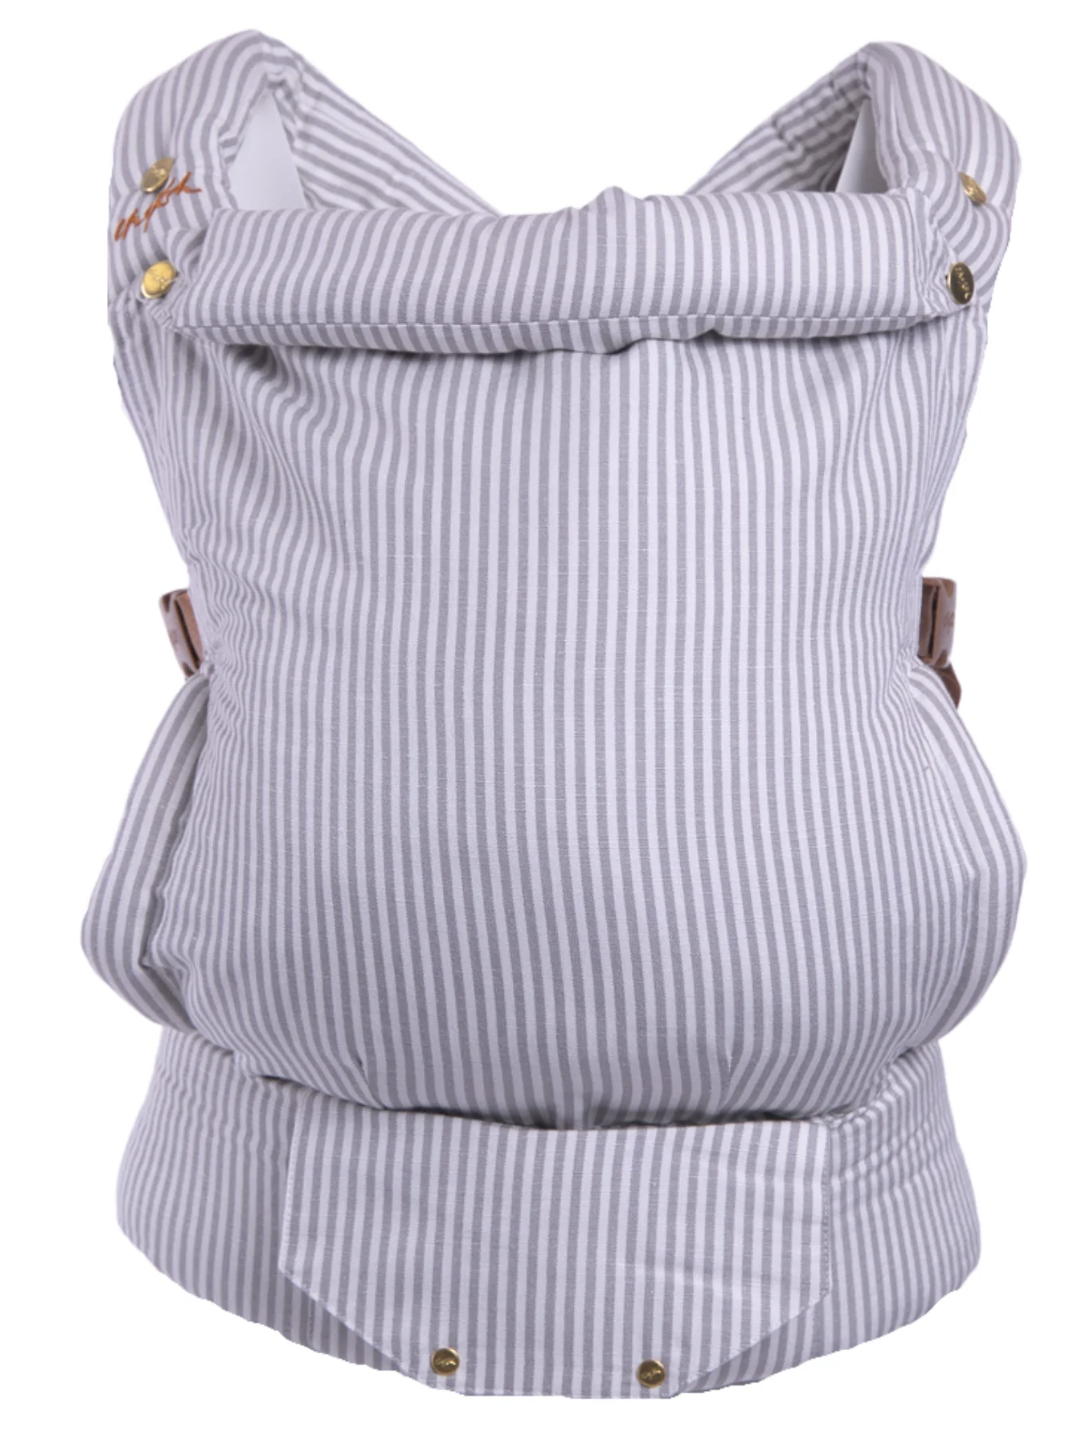 Baby Carrier - Chekoh Grey Stripe Clip